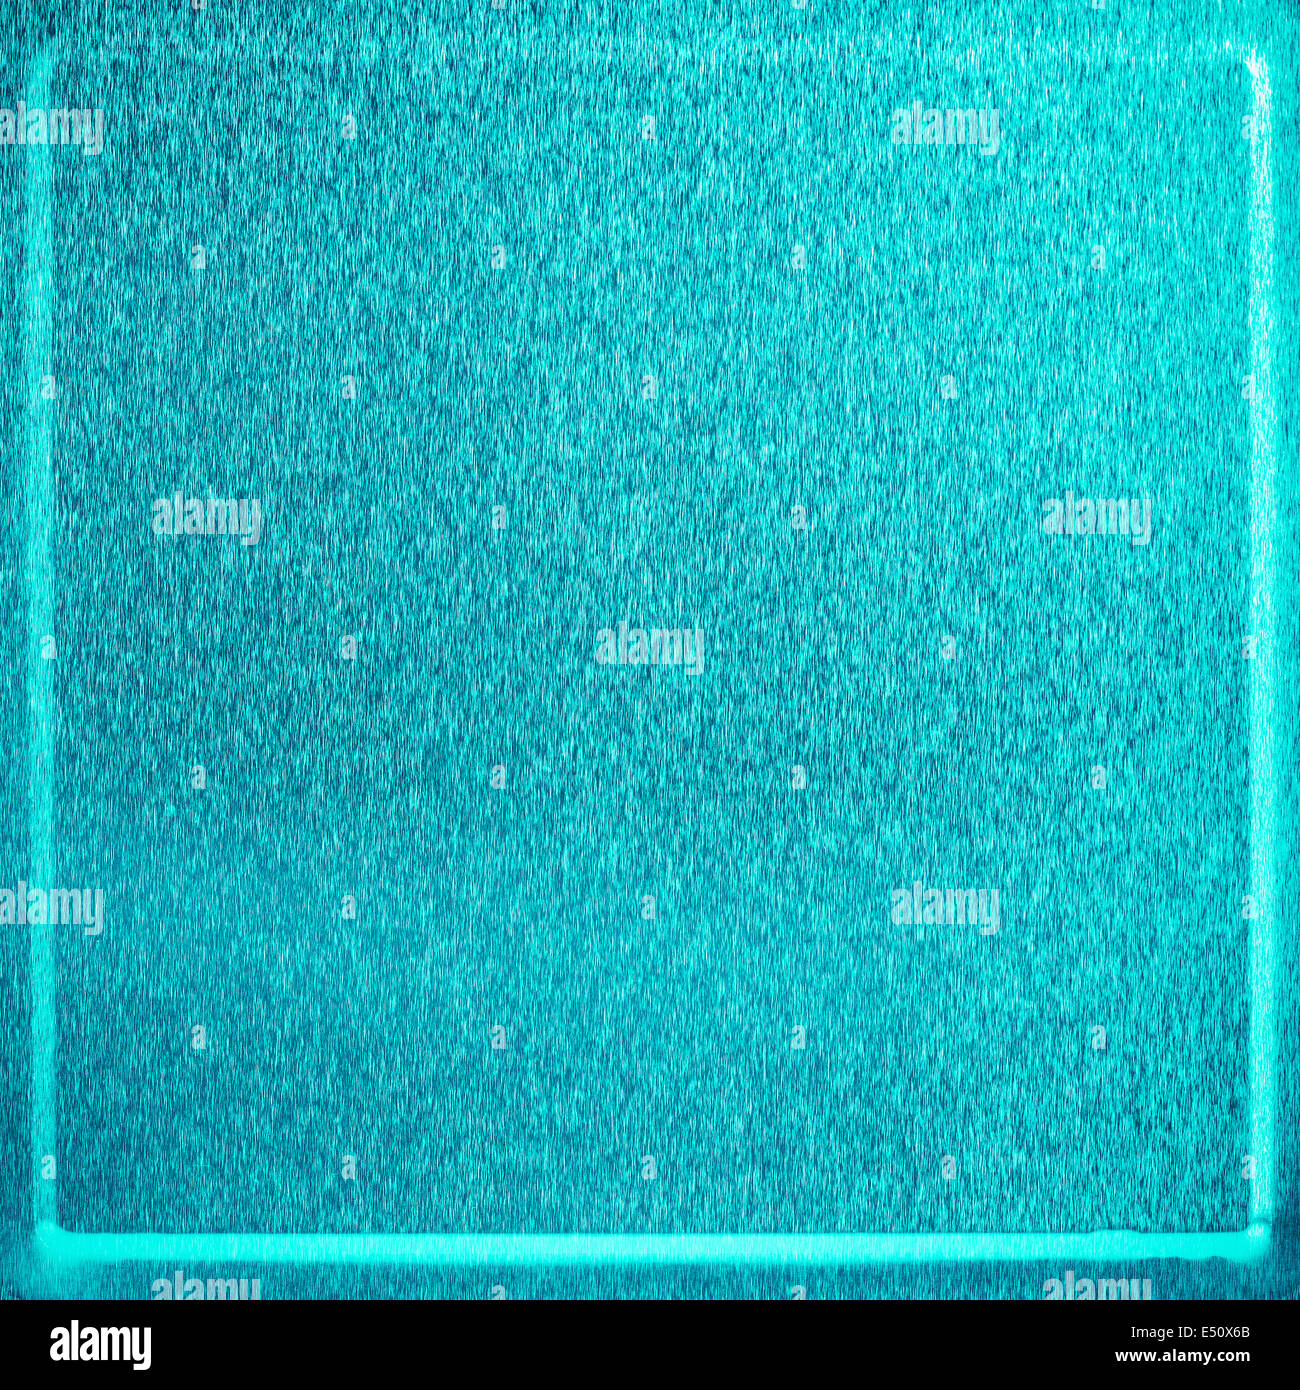 La textura de la superficie de metal azul Foto de stock